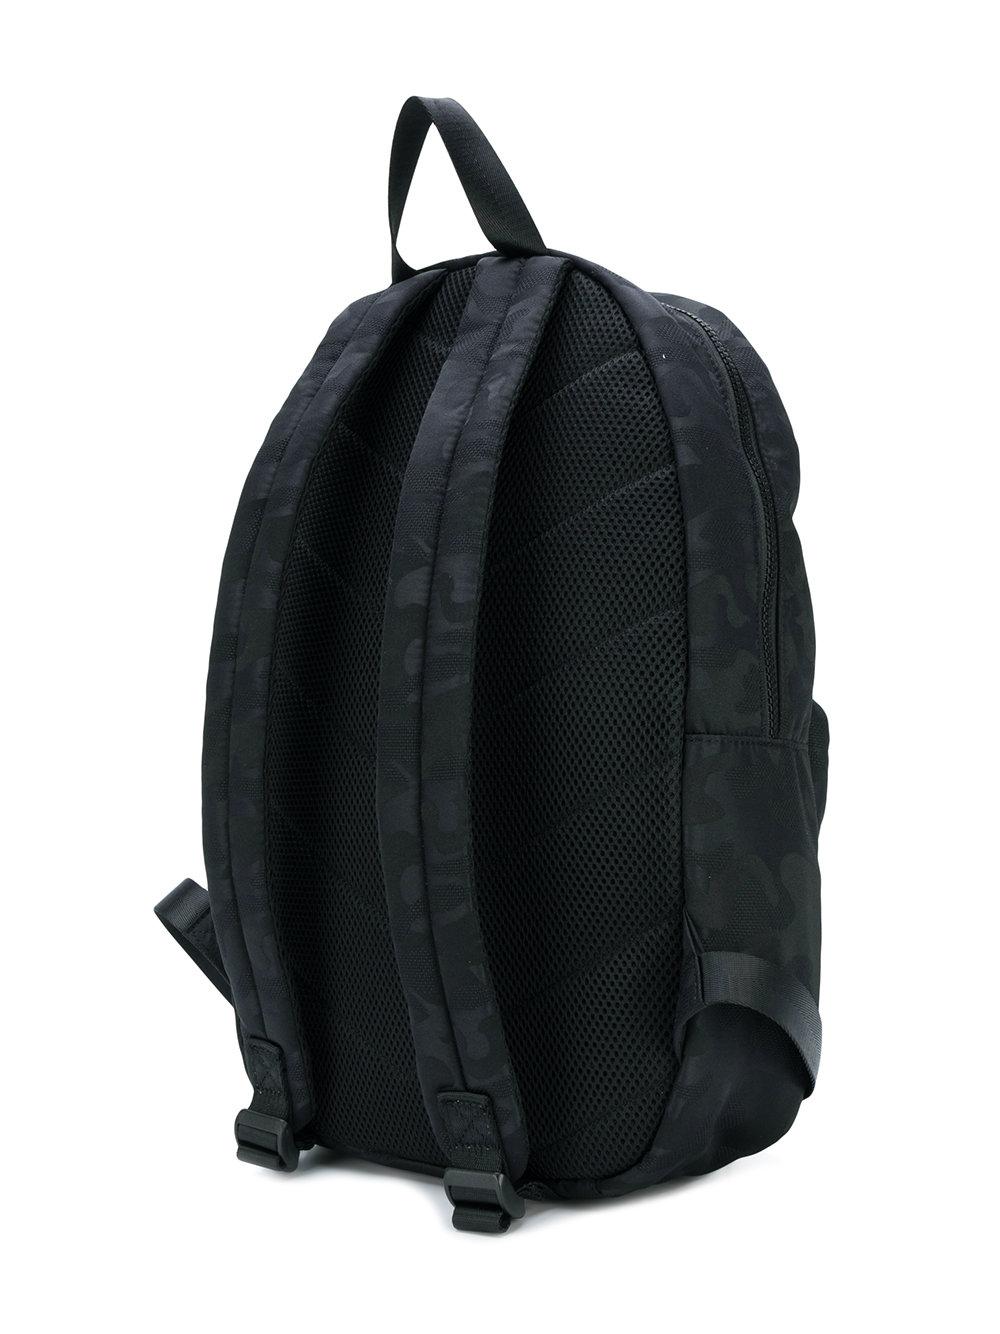 DIESEL Military Style Backpack in Black for Men - Lyst